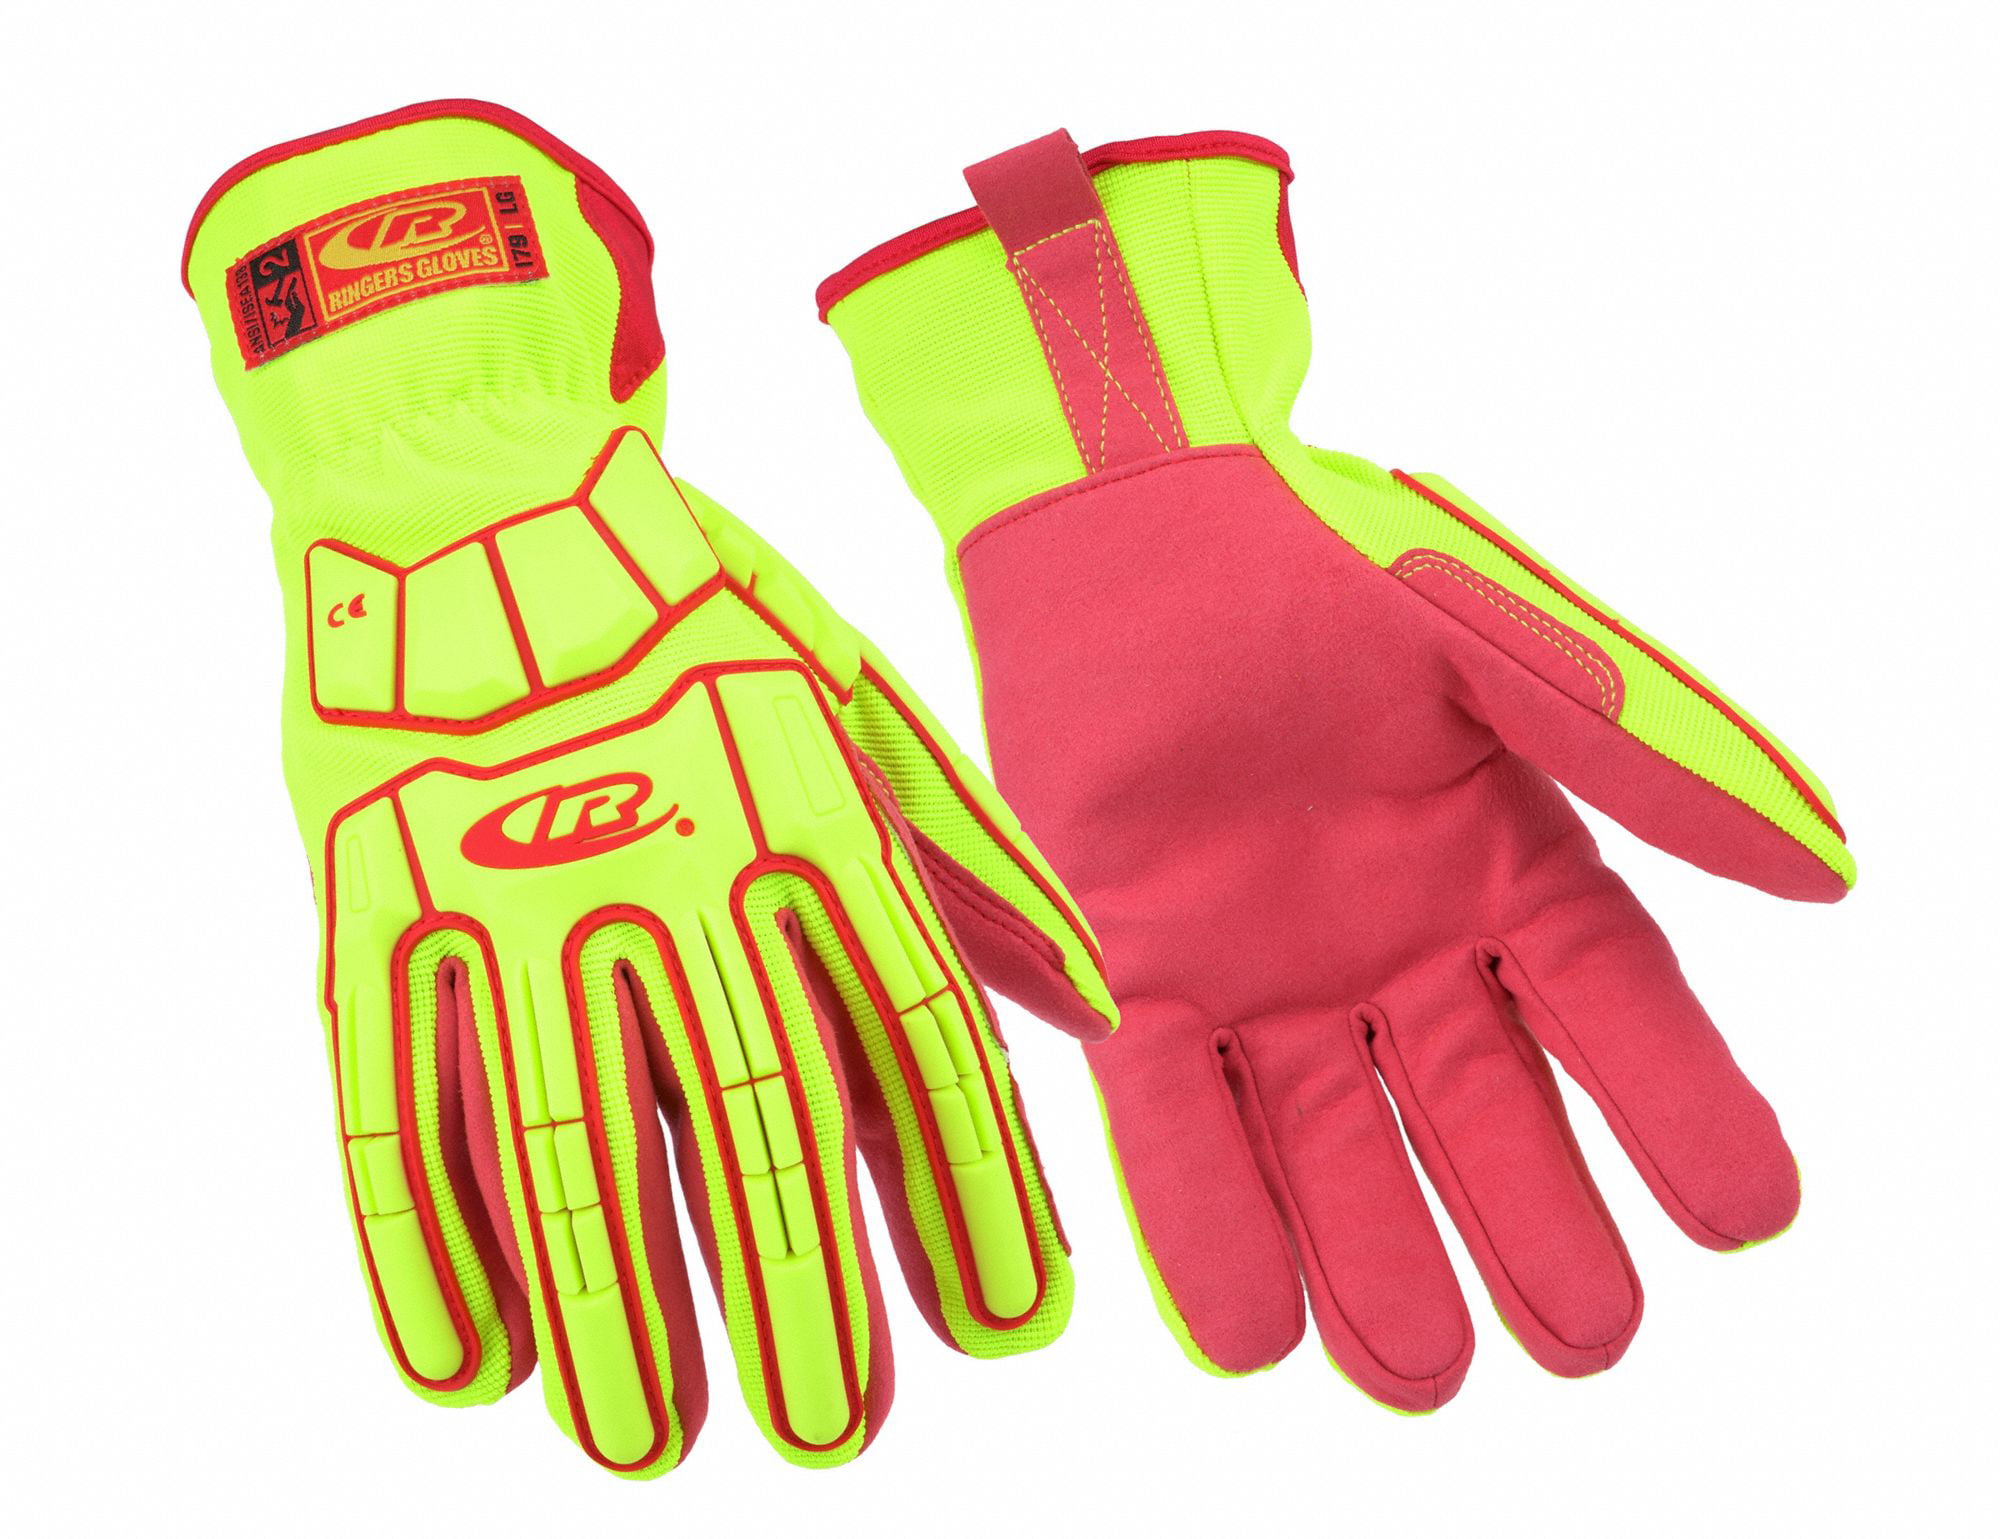 Ringers Gloves 313-09 Extrication Glove Medium Black for sale online 